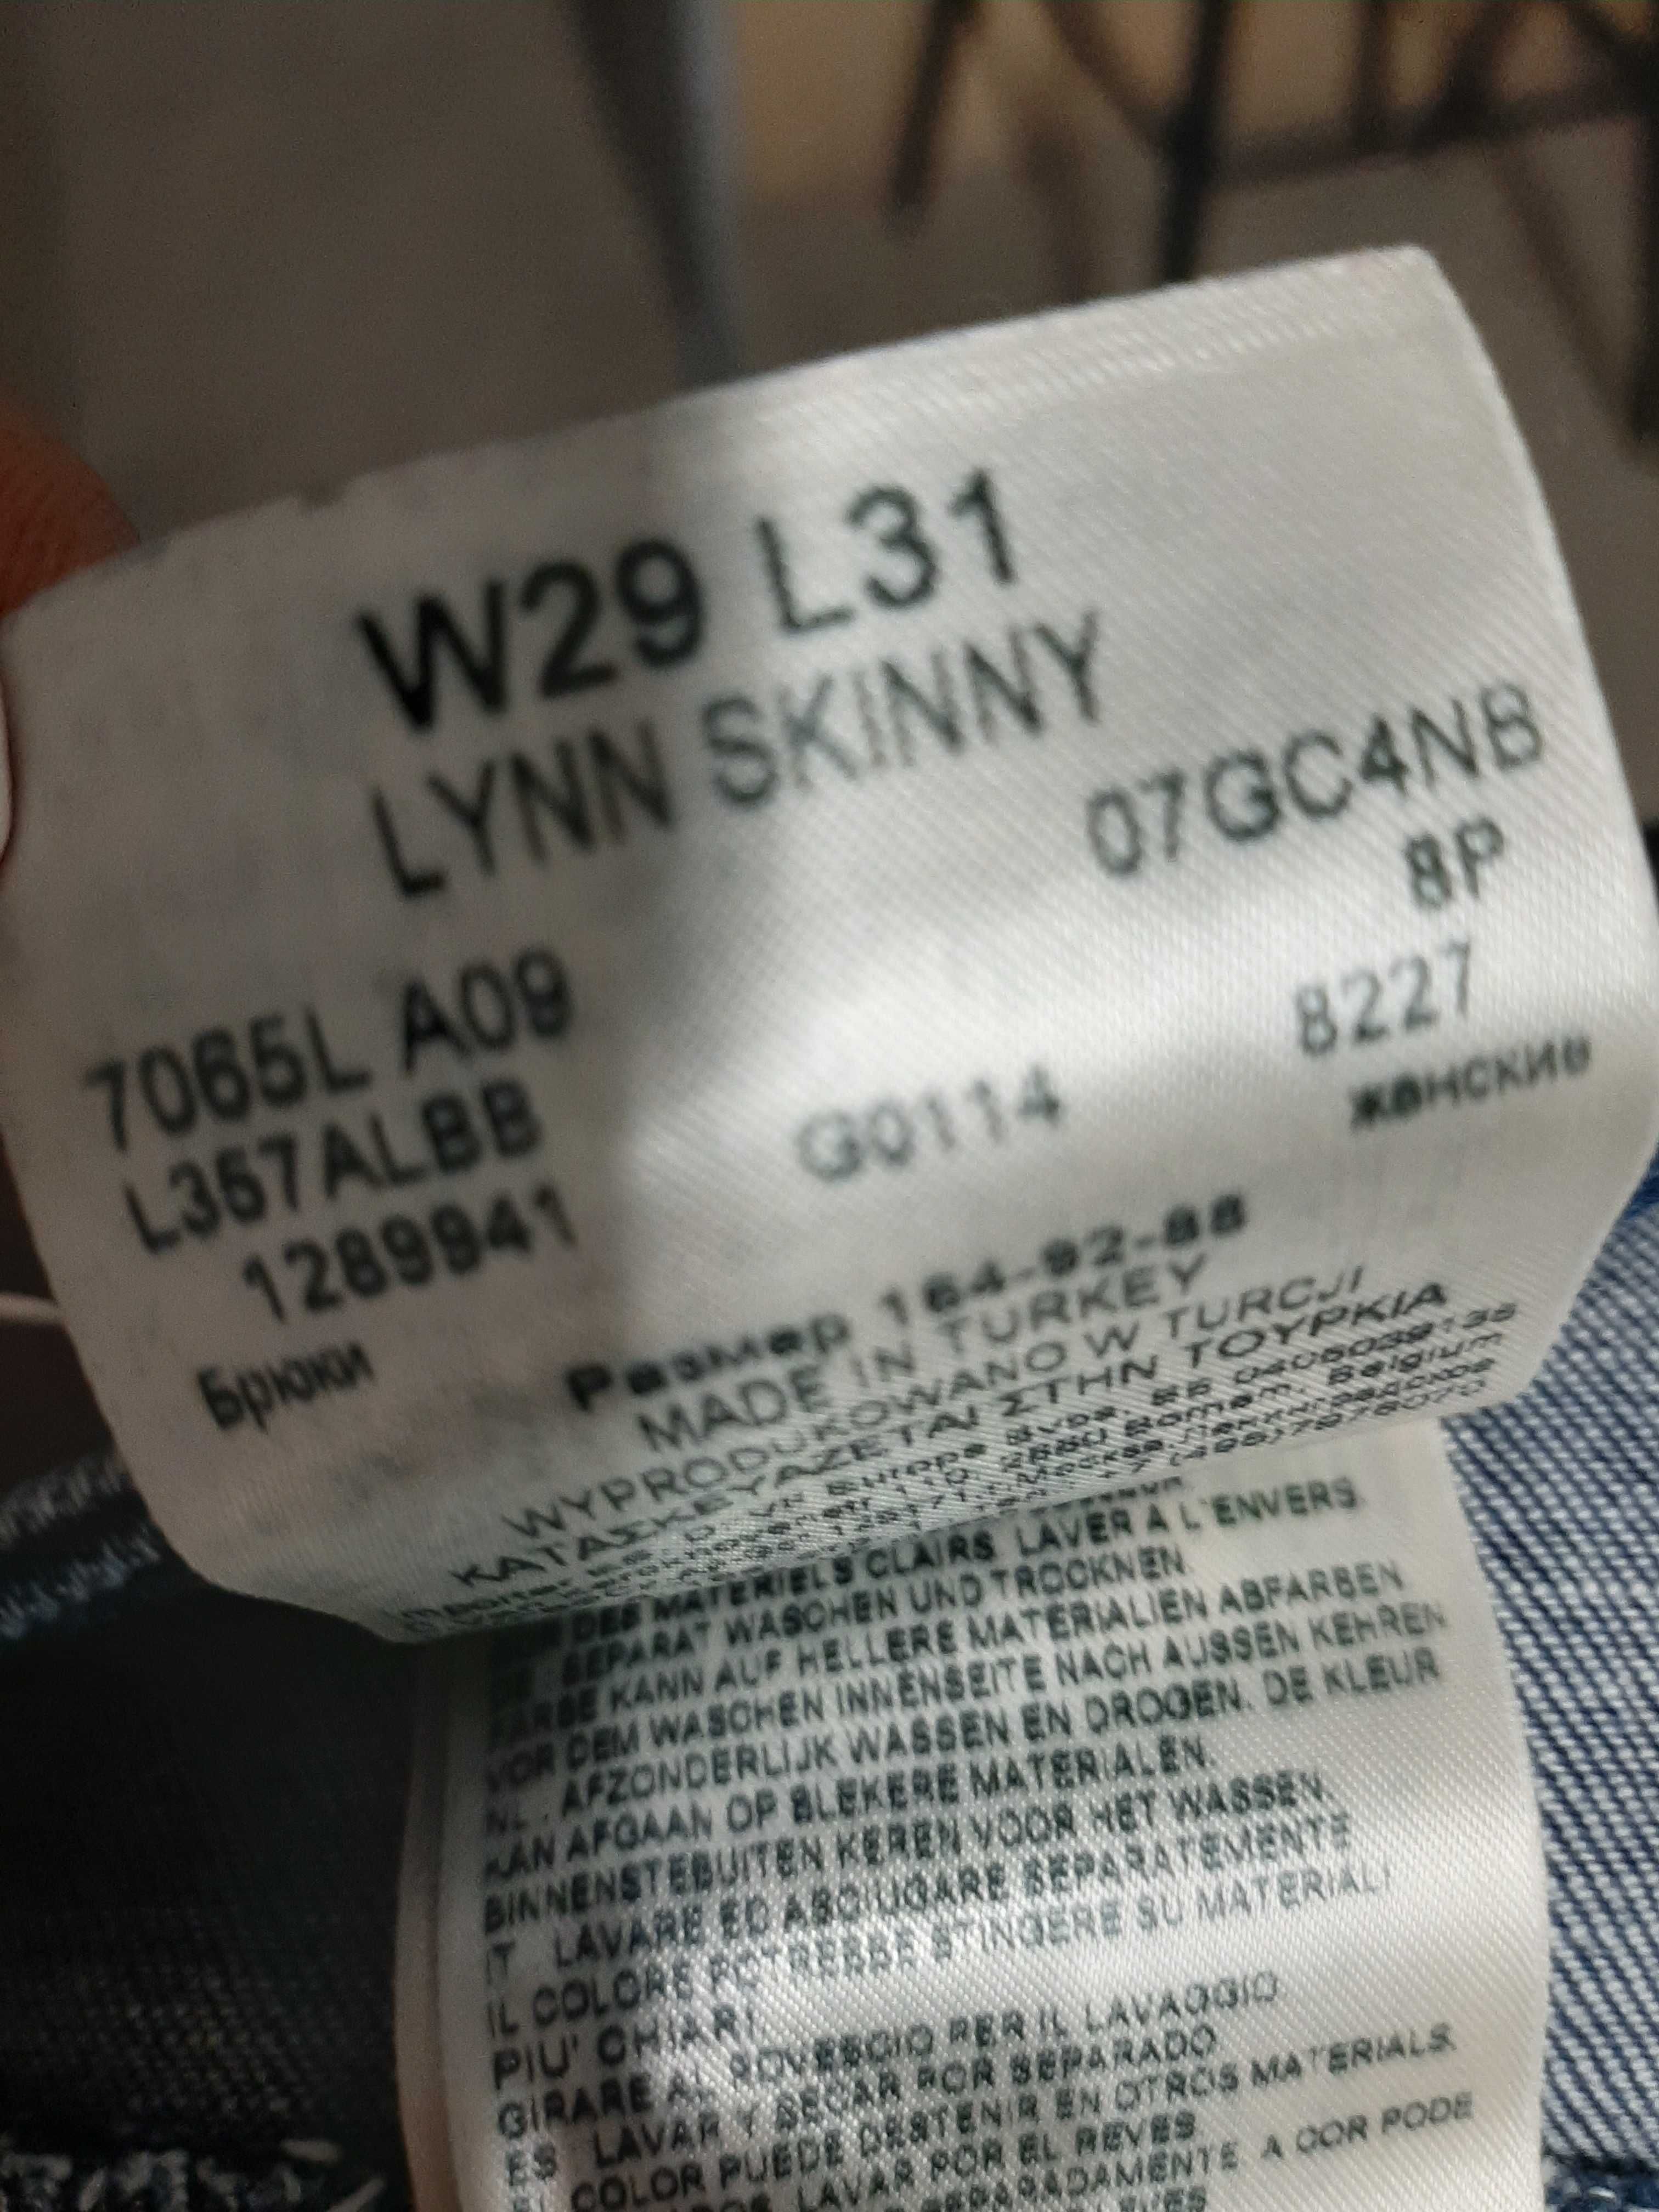 Spodnie Lee damskie LYNN SKINNY W29 L31